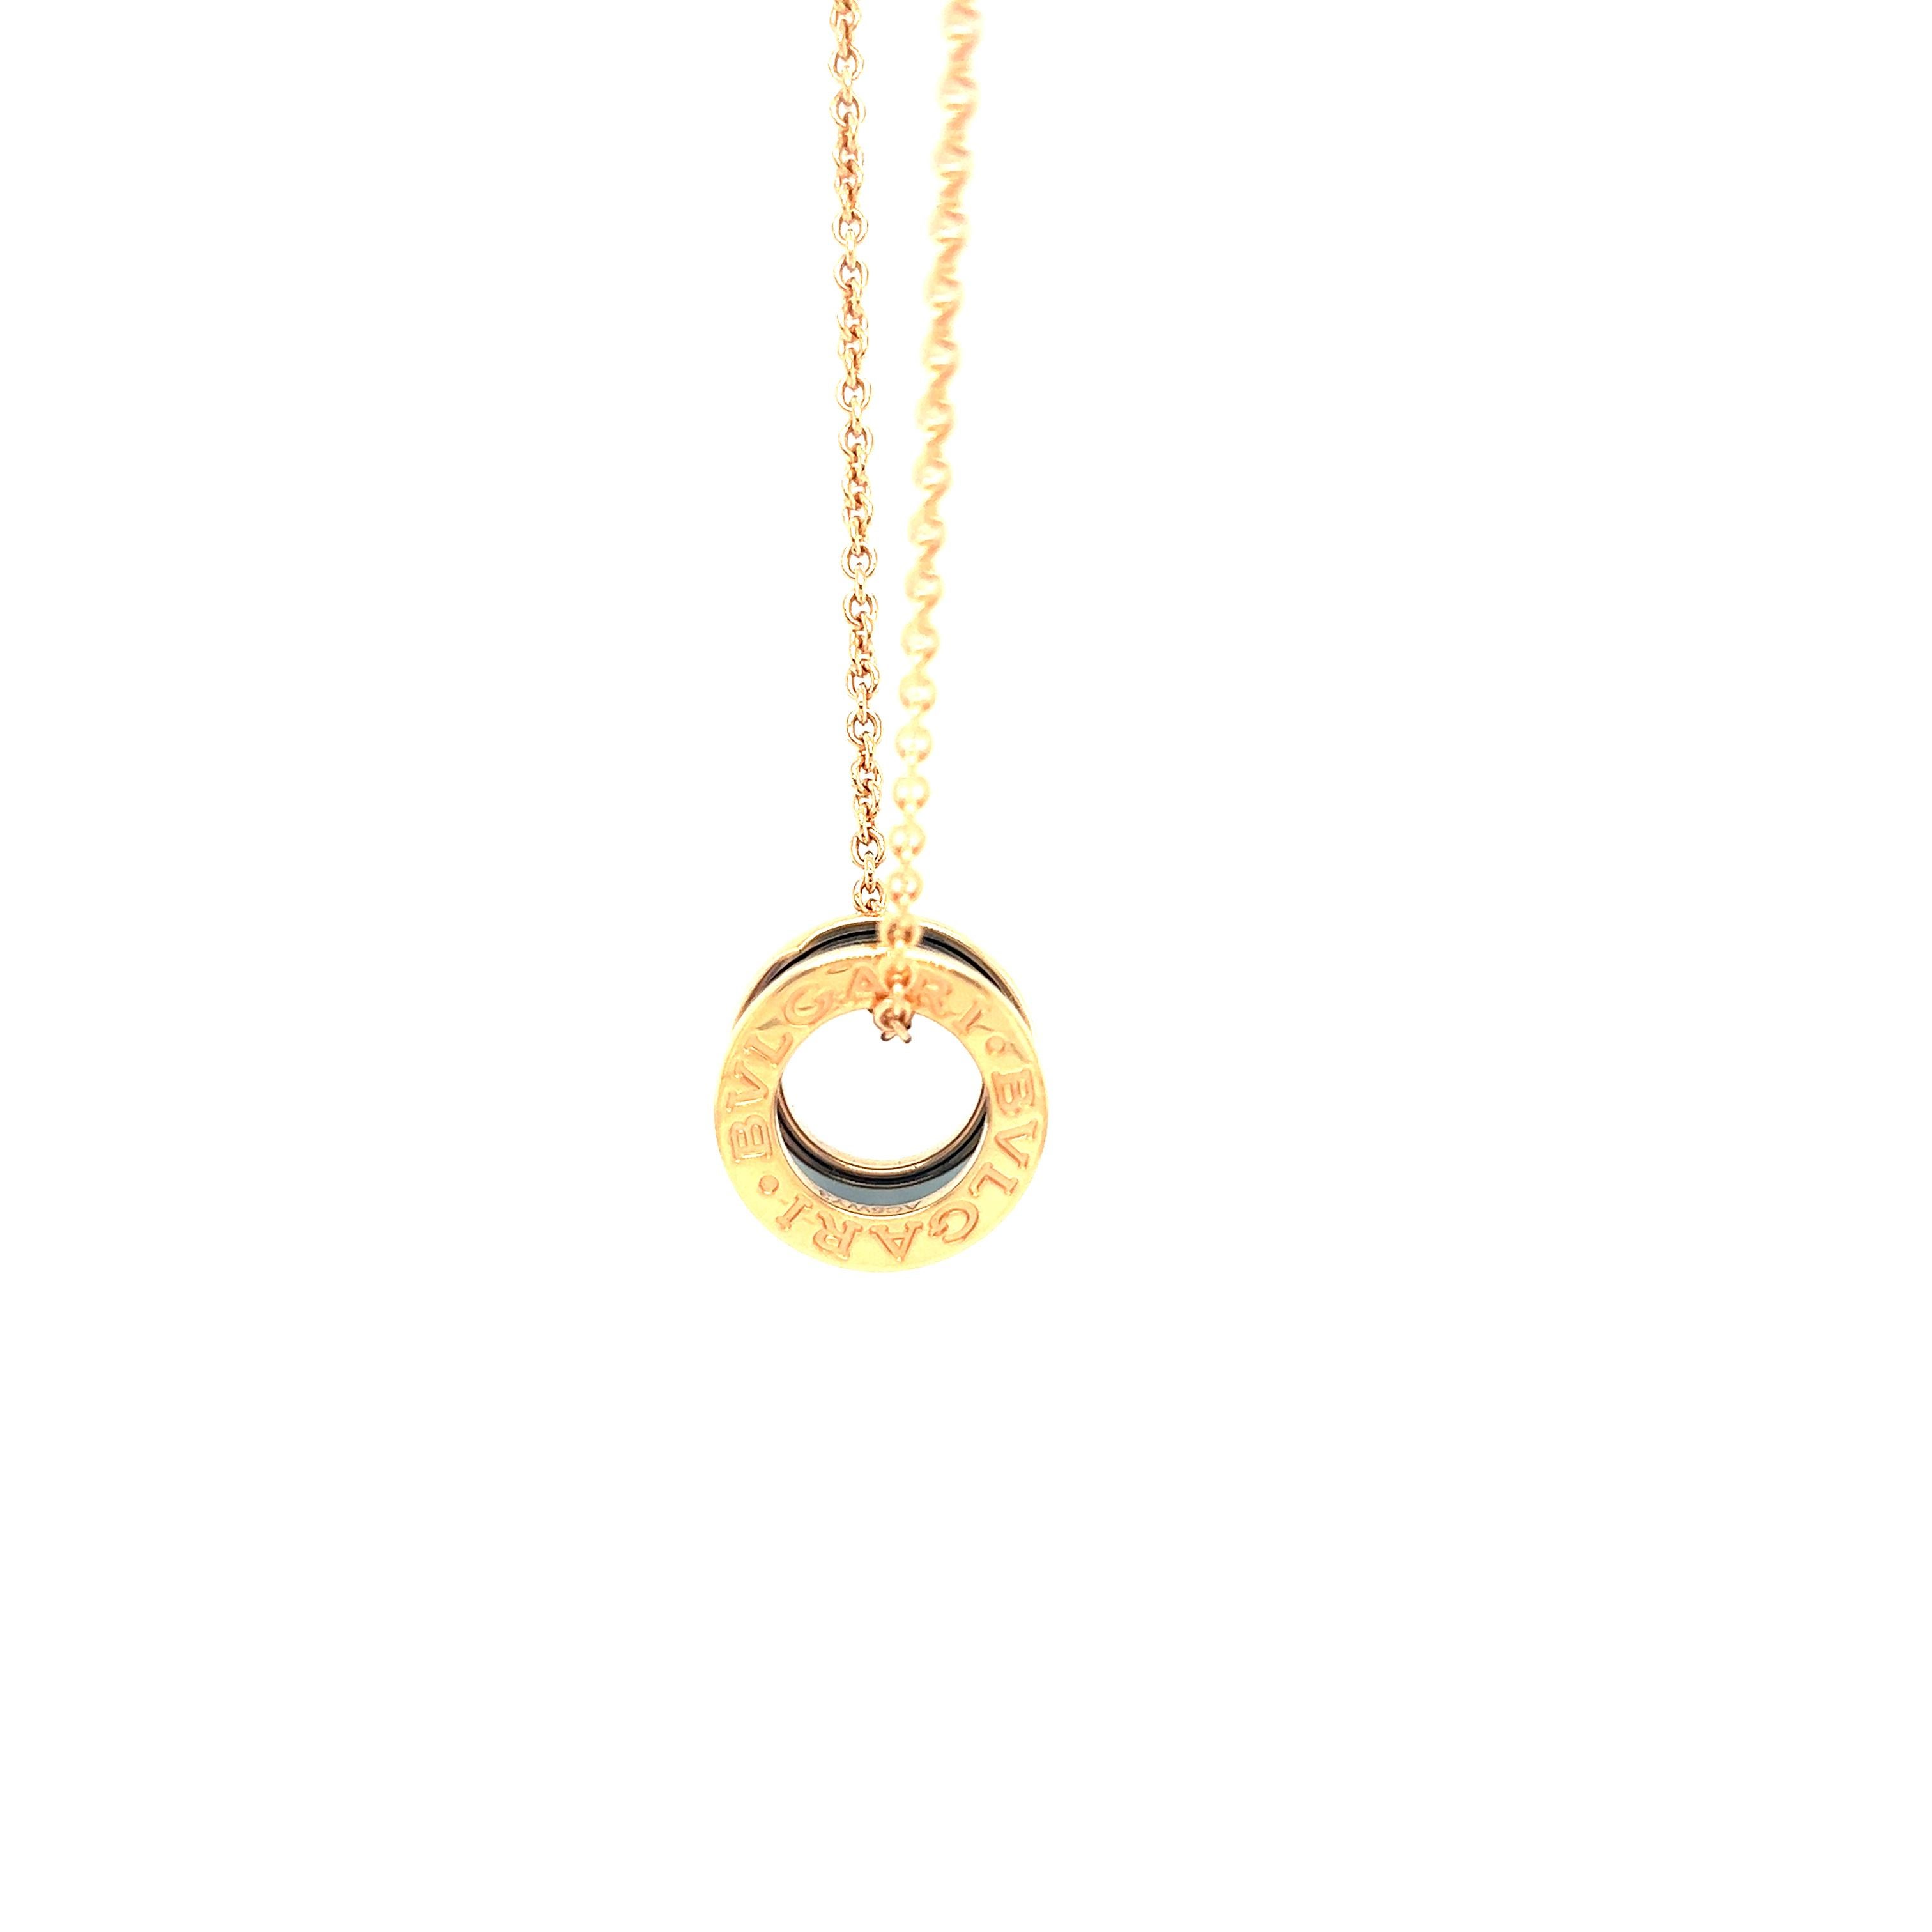 Bvlgari B-Zero rose gold and ceramic pendant model number 358050 For Sale 4